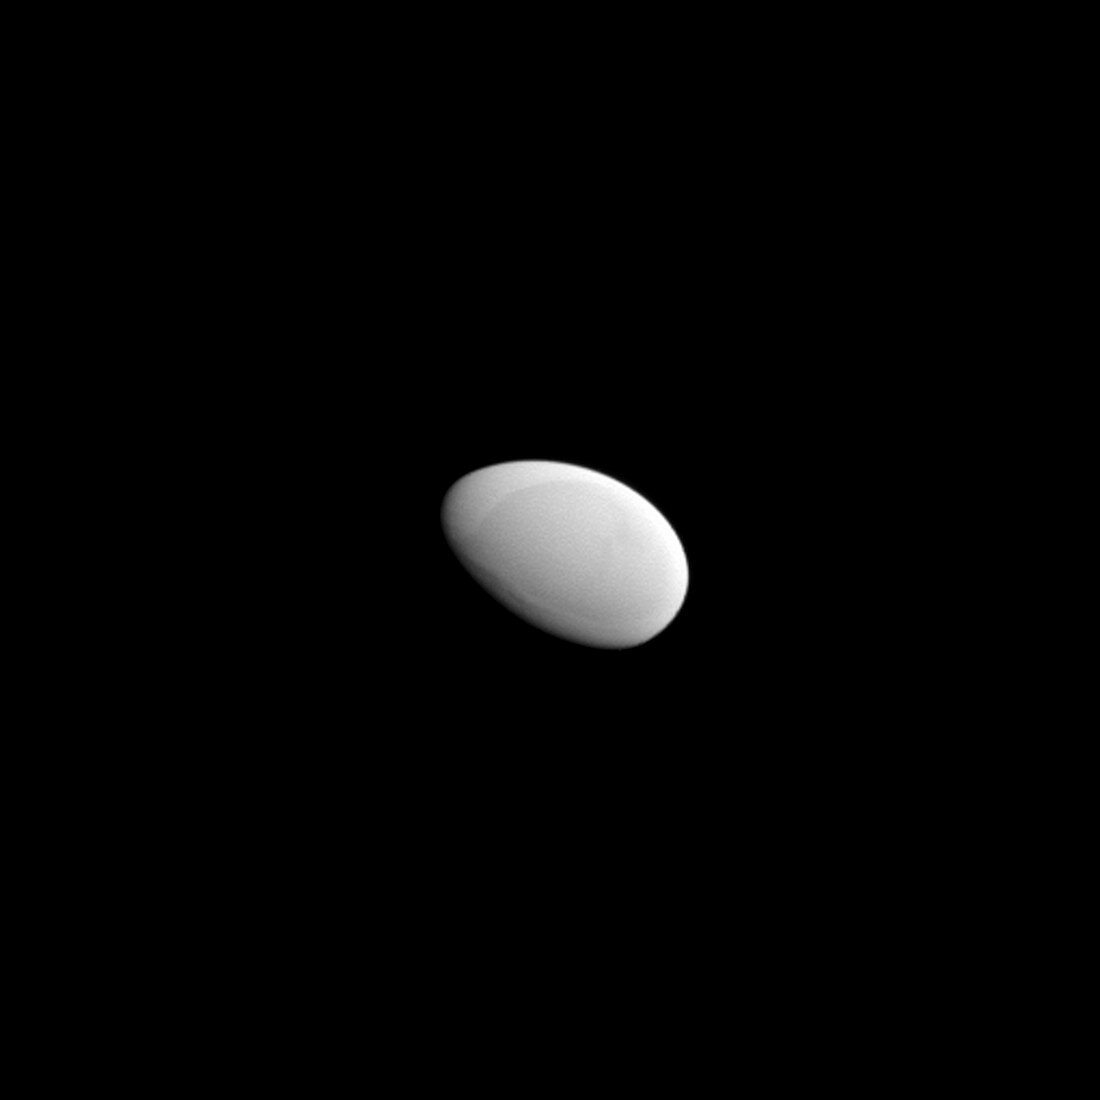 Saturn's moon Methone, Cassini image